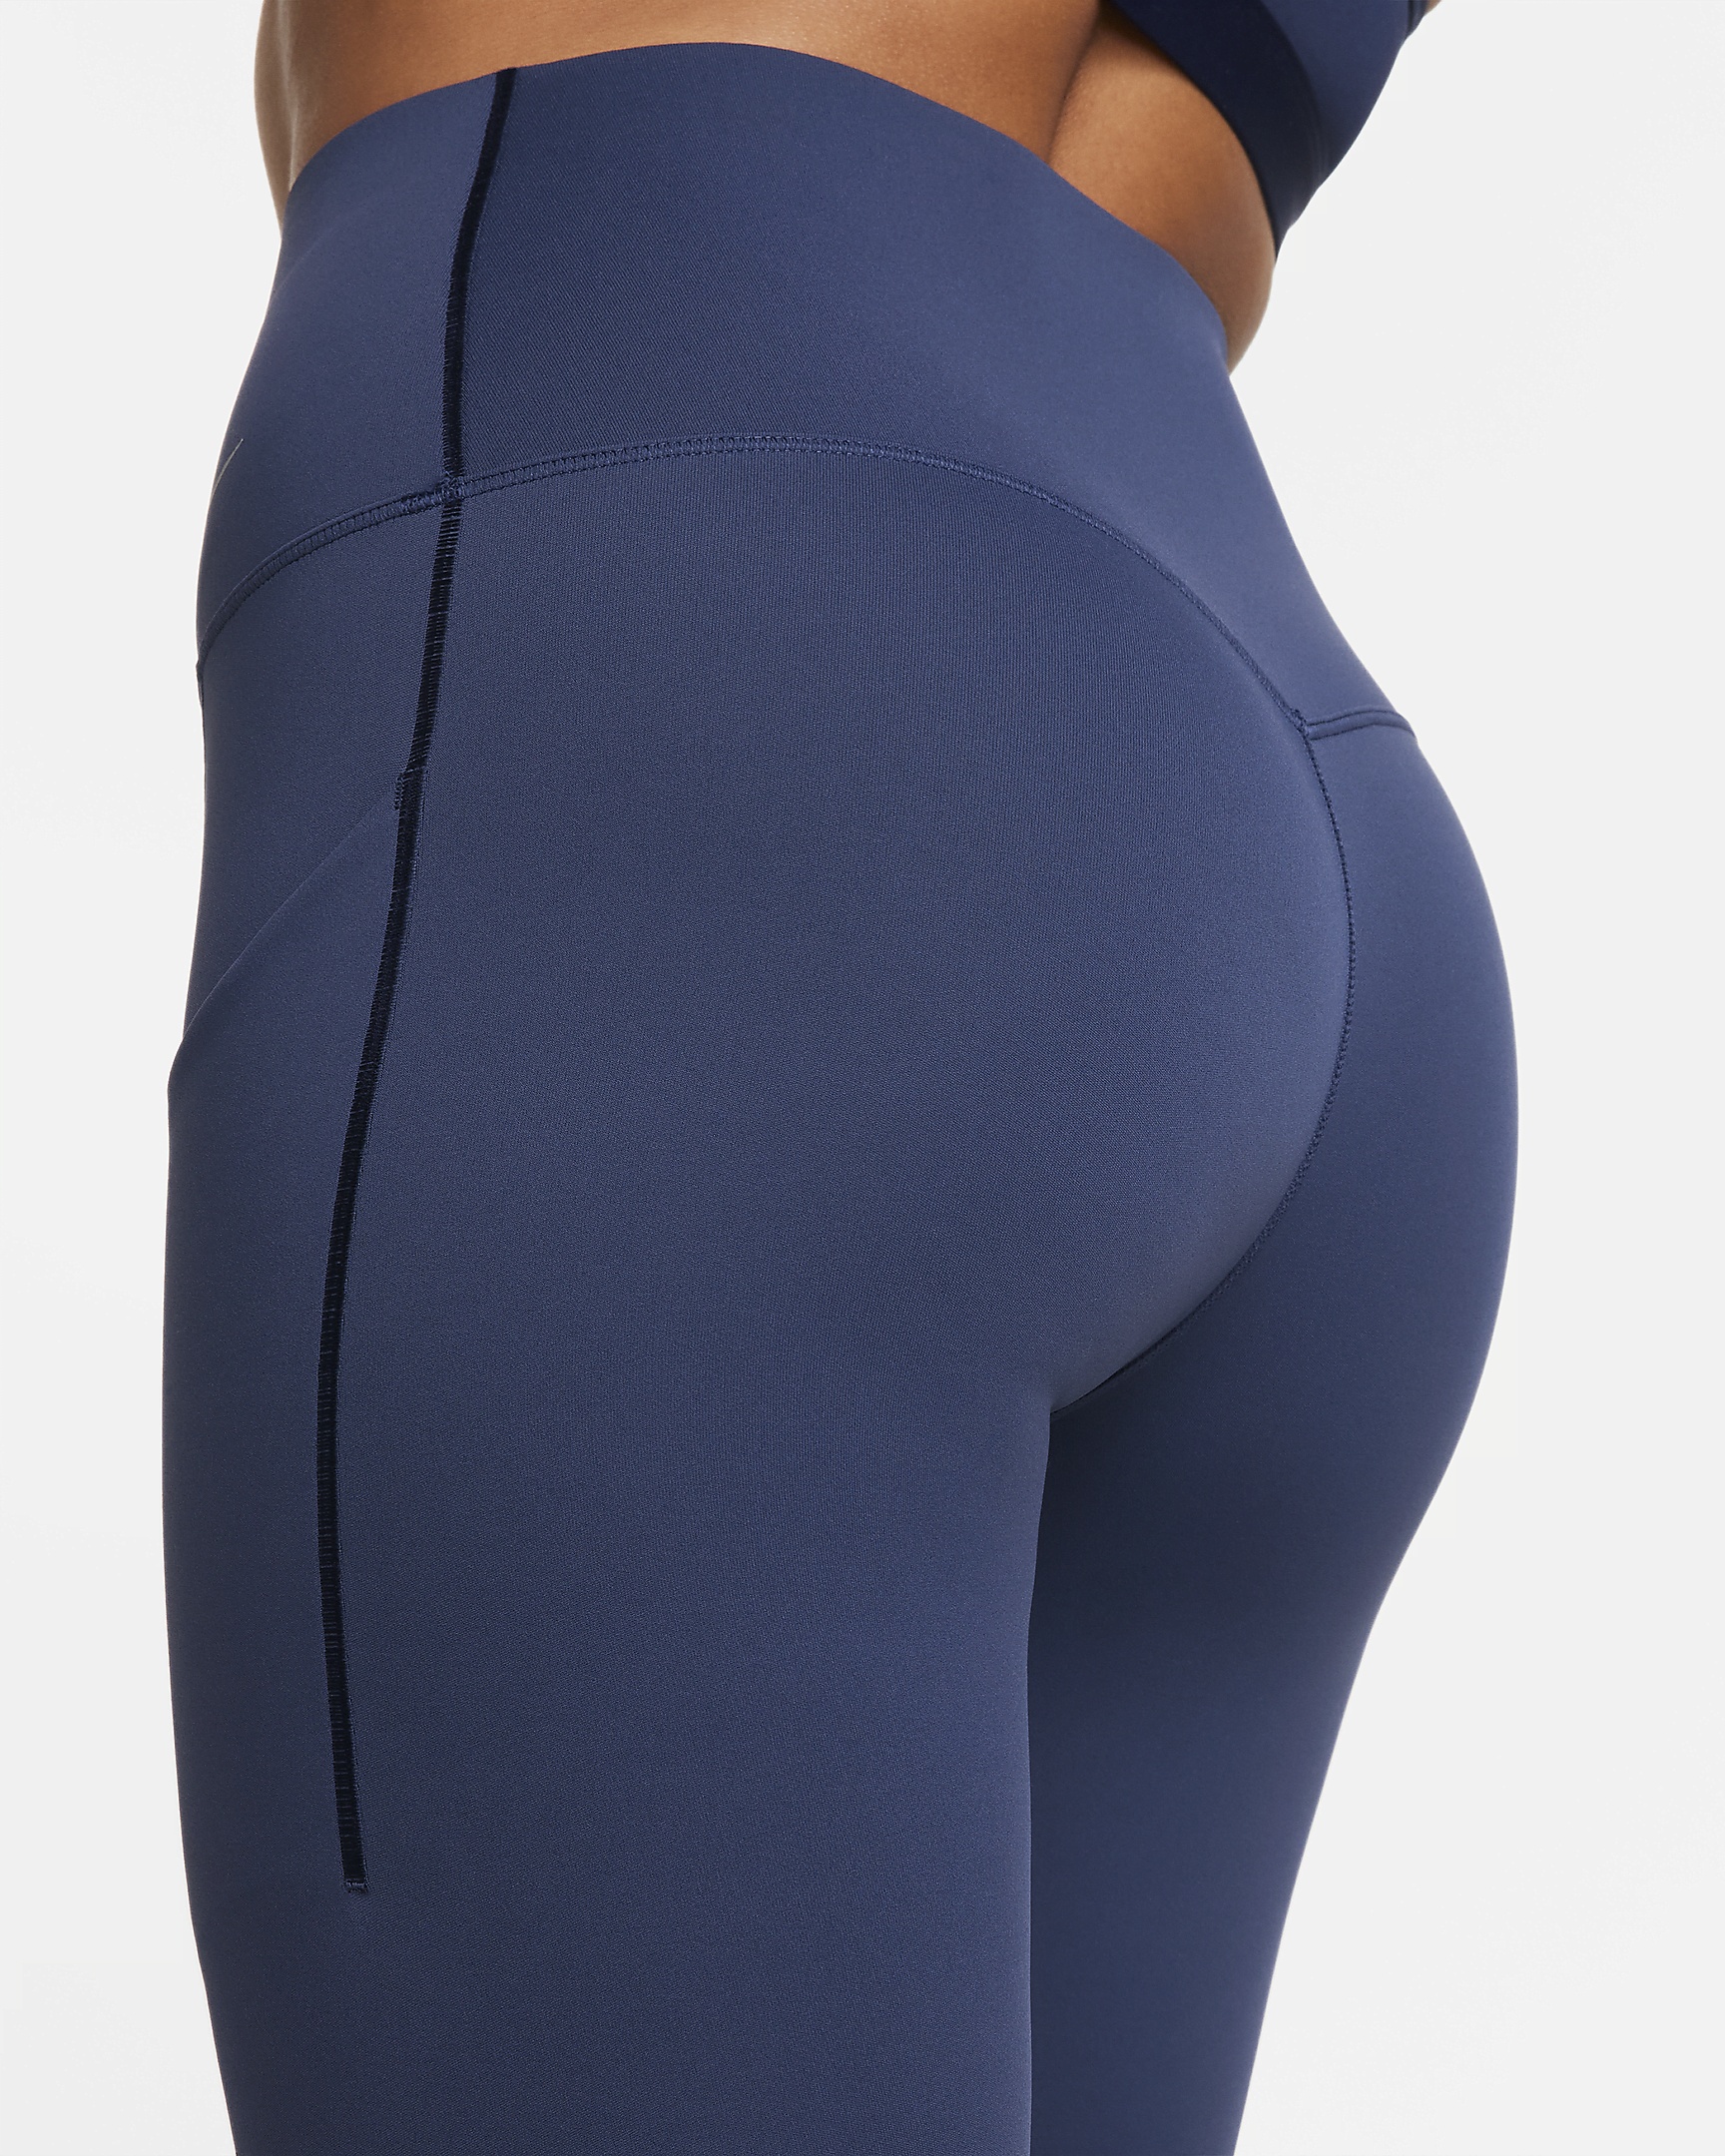 Nike Women's Universa Medium-Support High-Waisted Full-Length Leggings with Pockets - 6